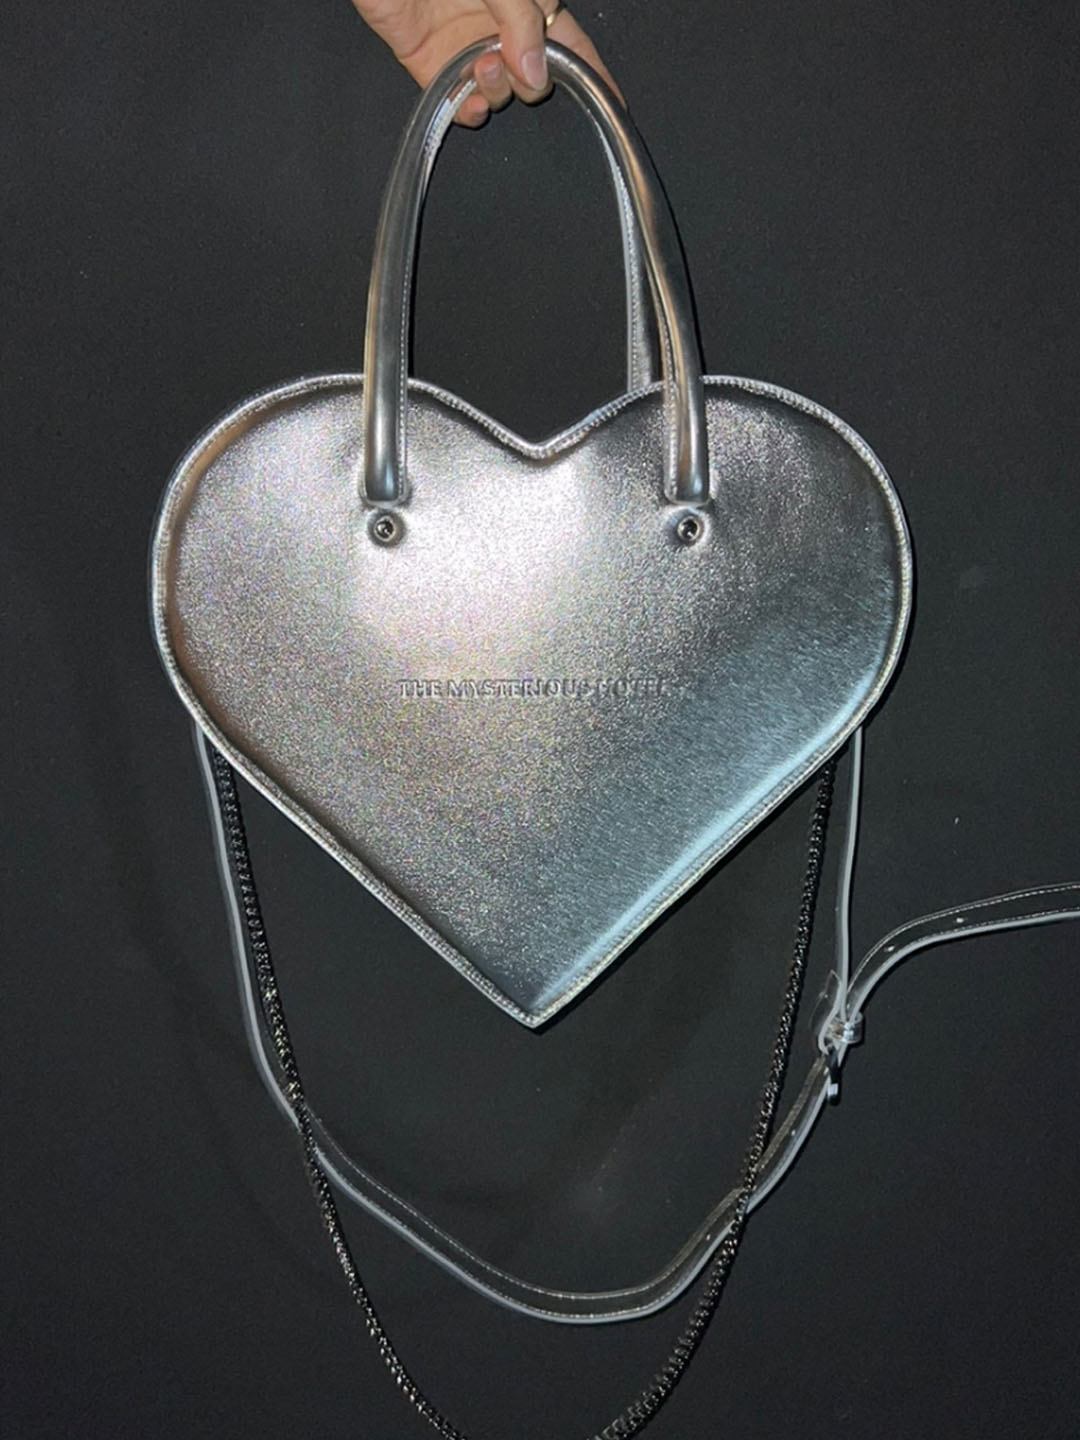 GIANT HEART CHAIN BAG